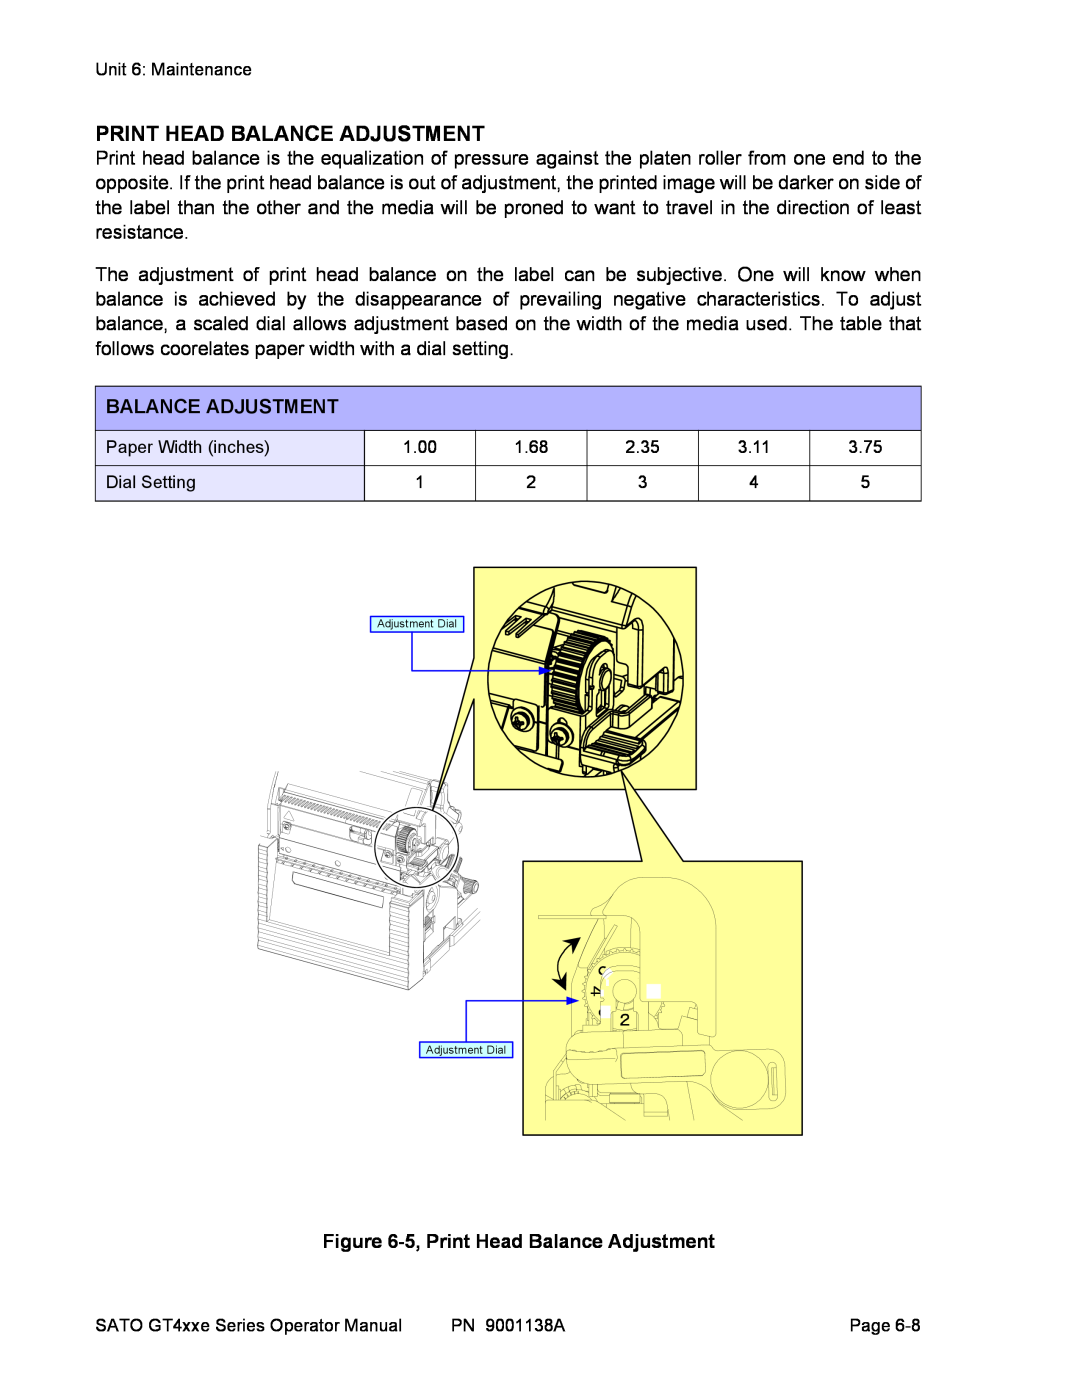 SATO GT 424e, GT408, GT 410 manual 5, Print Head Balance Adjustment 